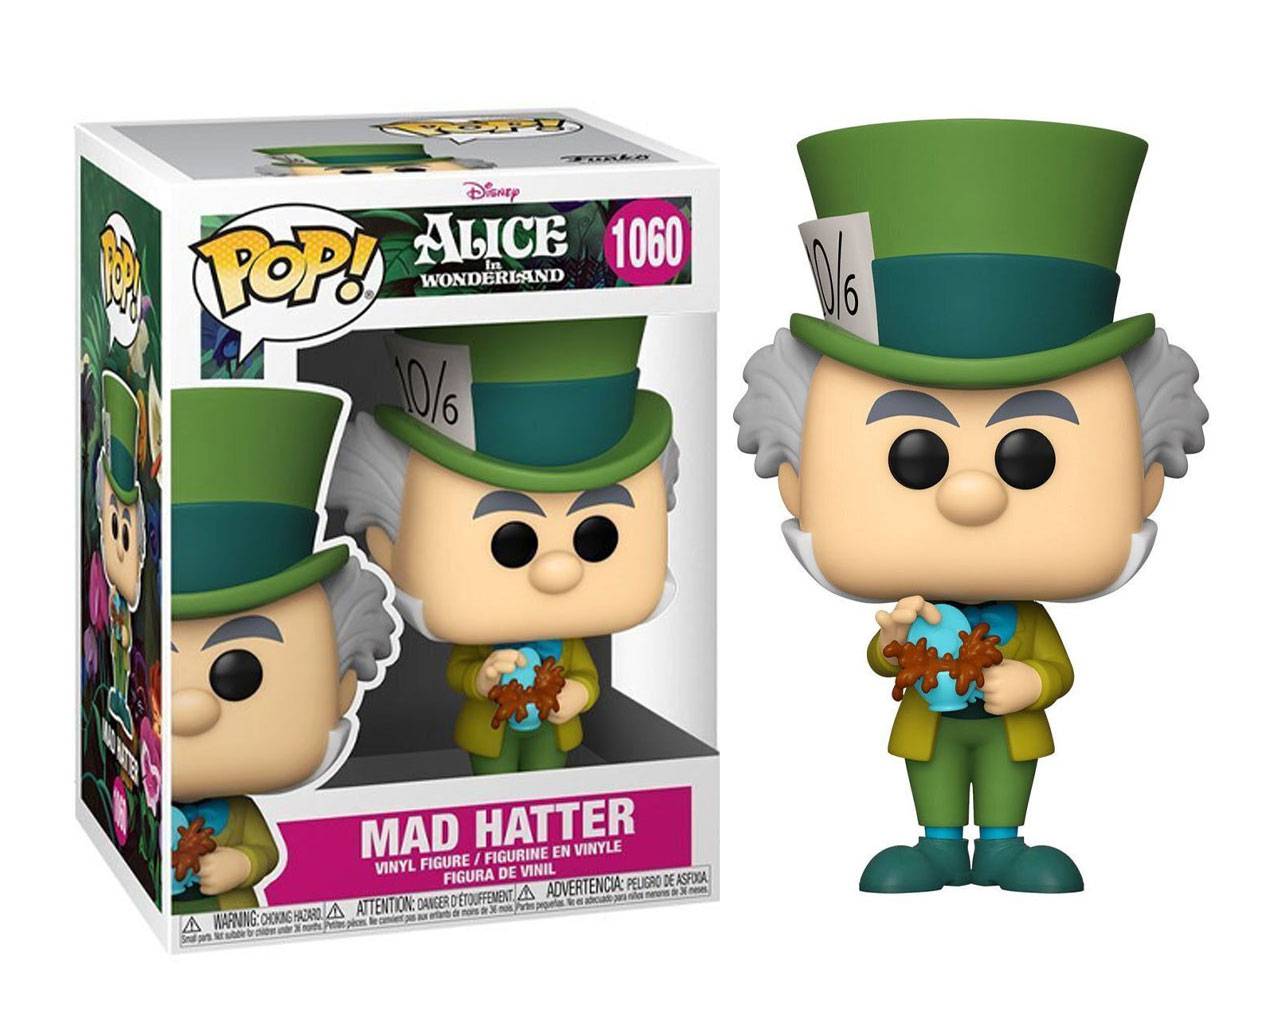 Mad Hatter (Classic) Pop! Vinyl